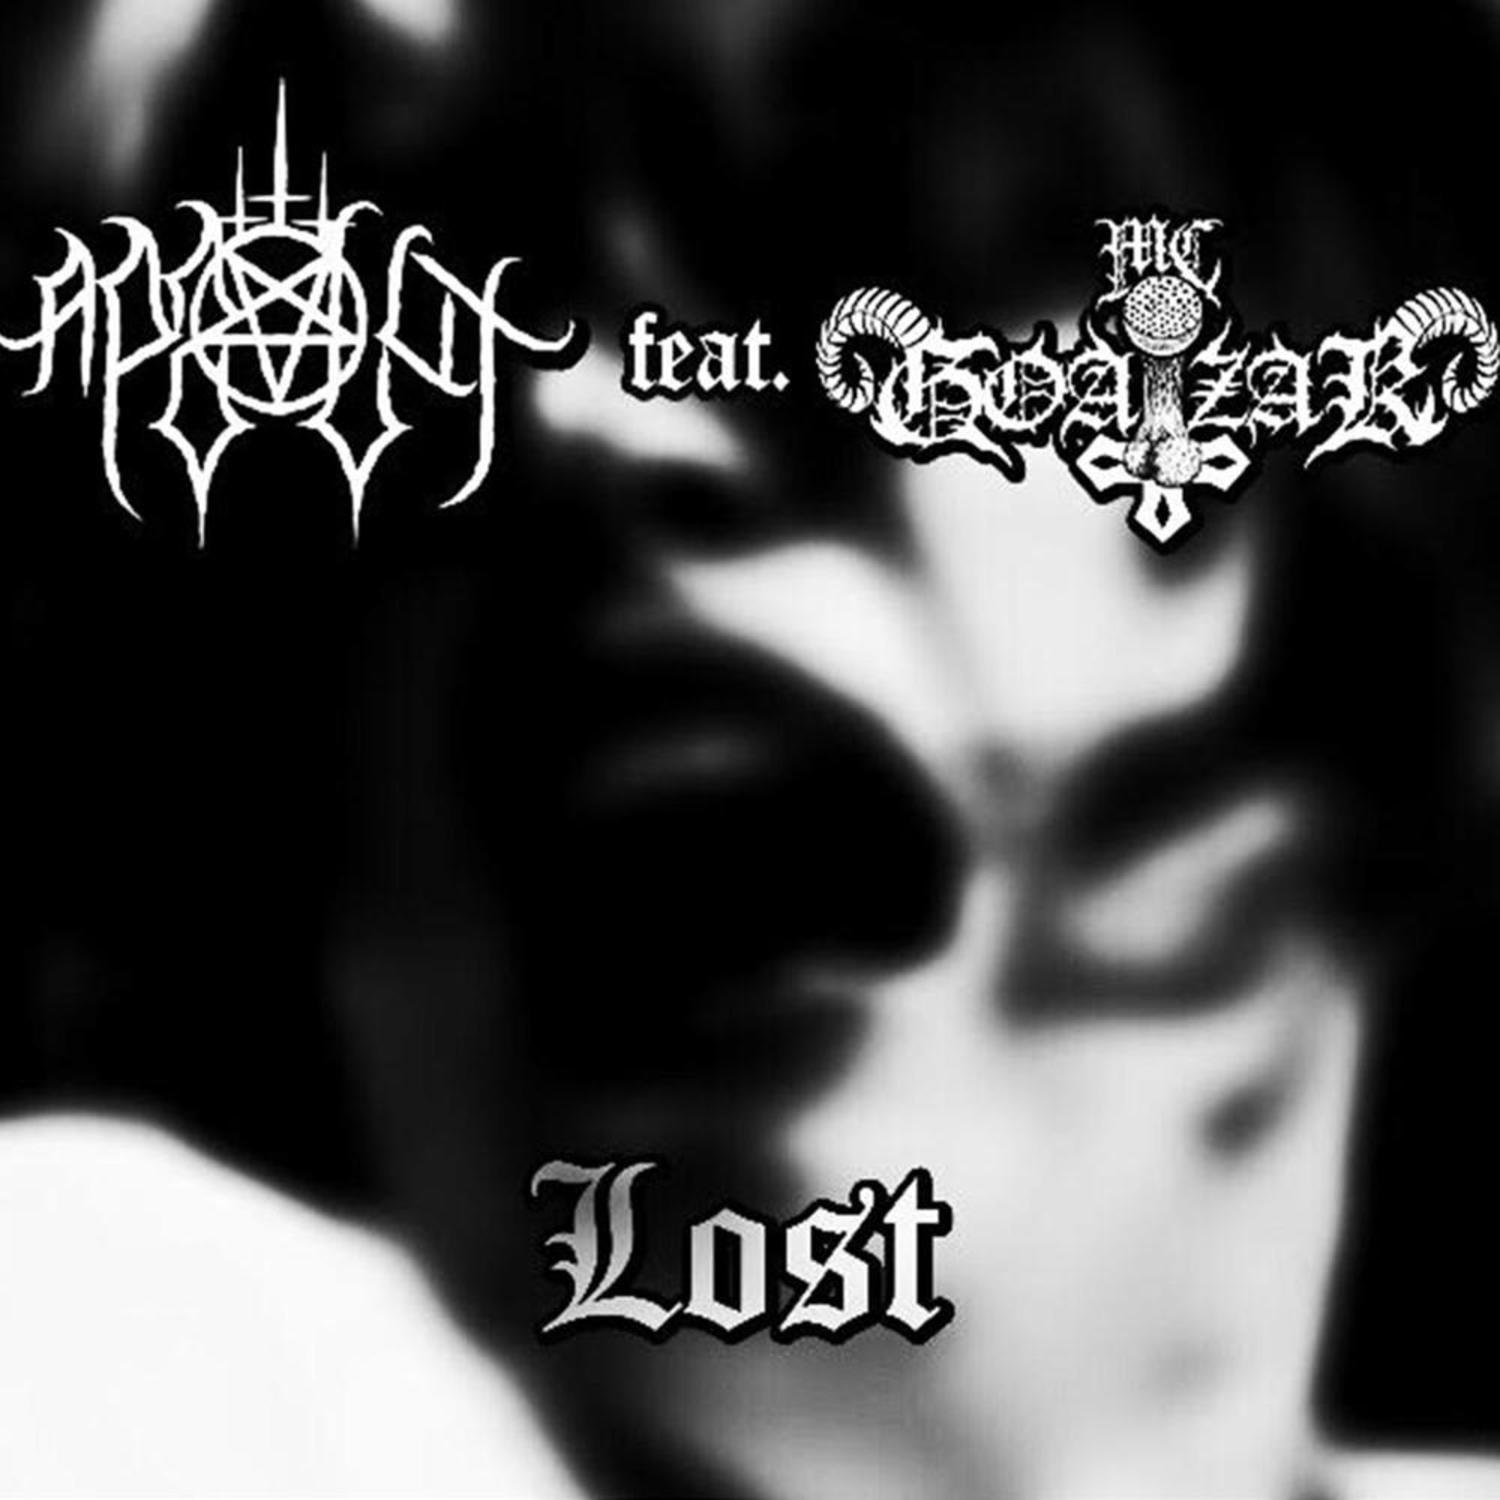 Apzolut ft. MC Goatzak - LOST EP 